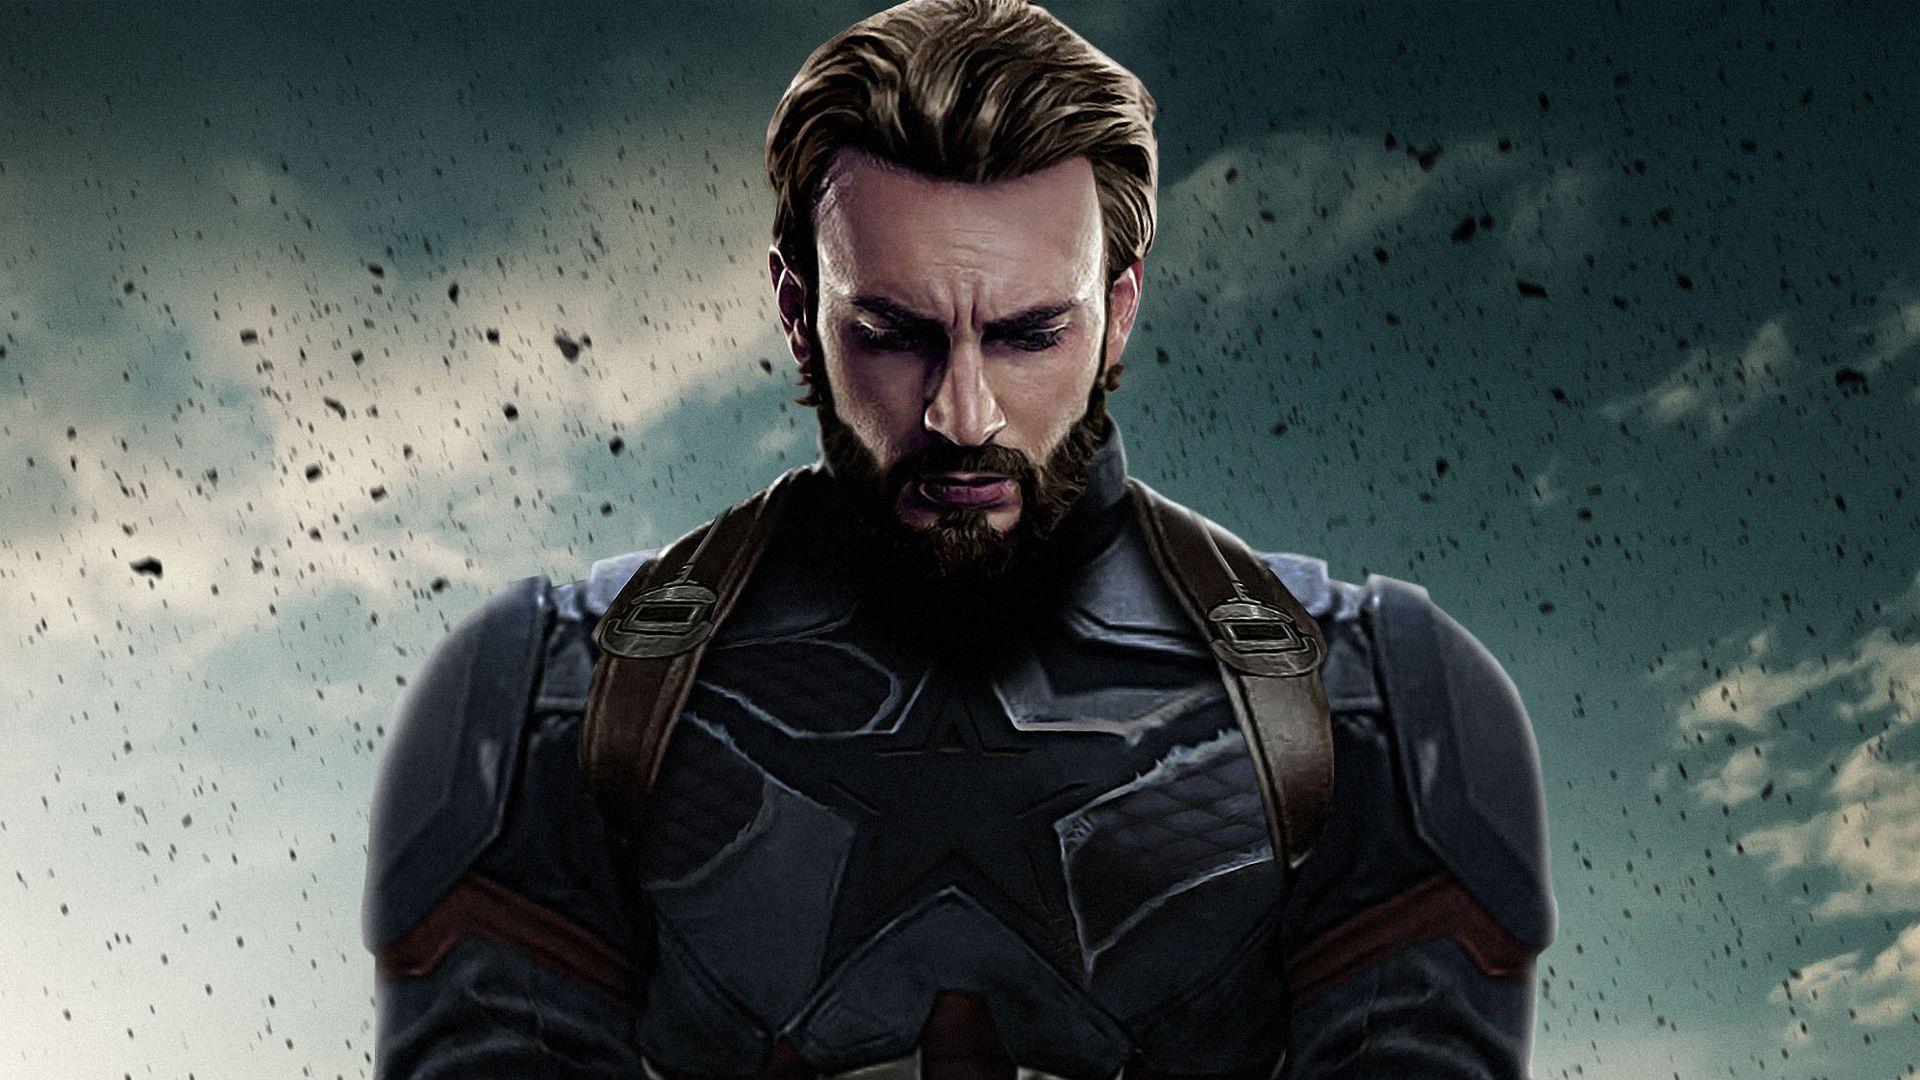 Infinity War Captain America Wallpaper .wallpaperaccess.com